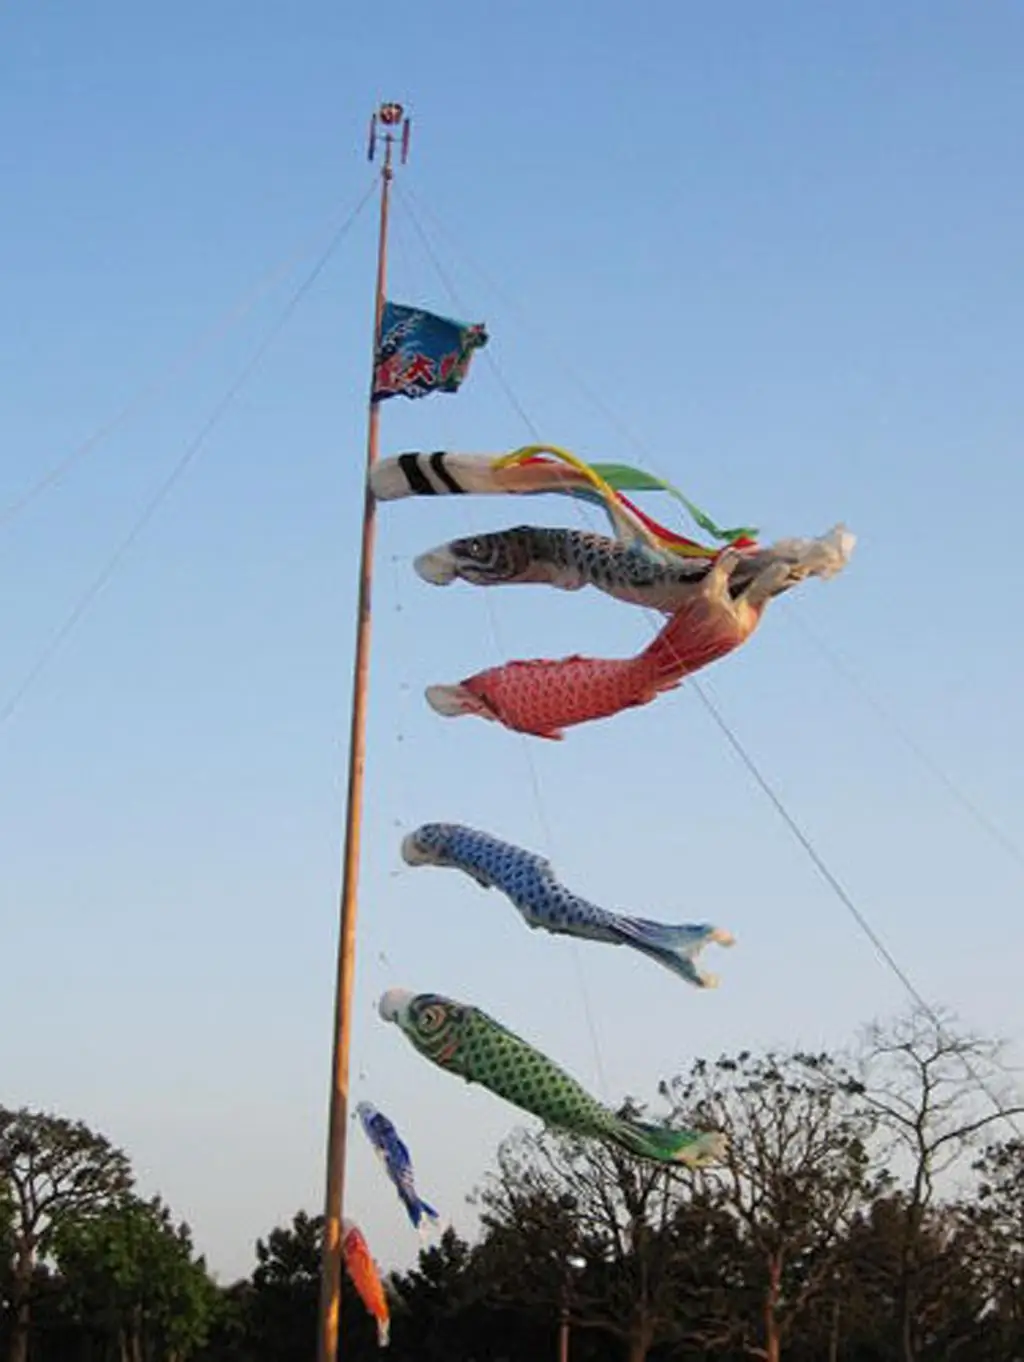 3Pcs Japanese Windsock Carp Flag Koi Nobori Sailfish Fish Wind Streamer Home Party Decorations